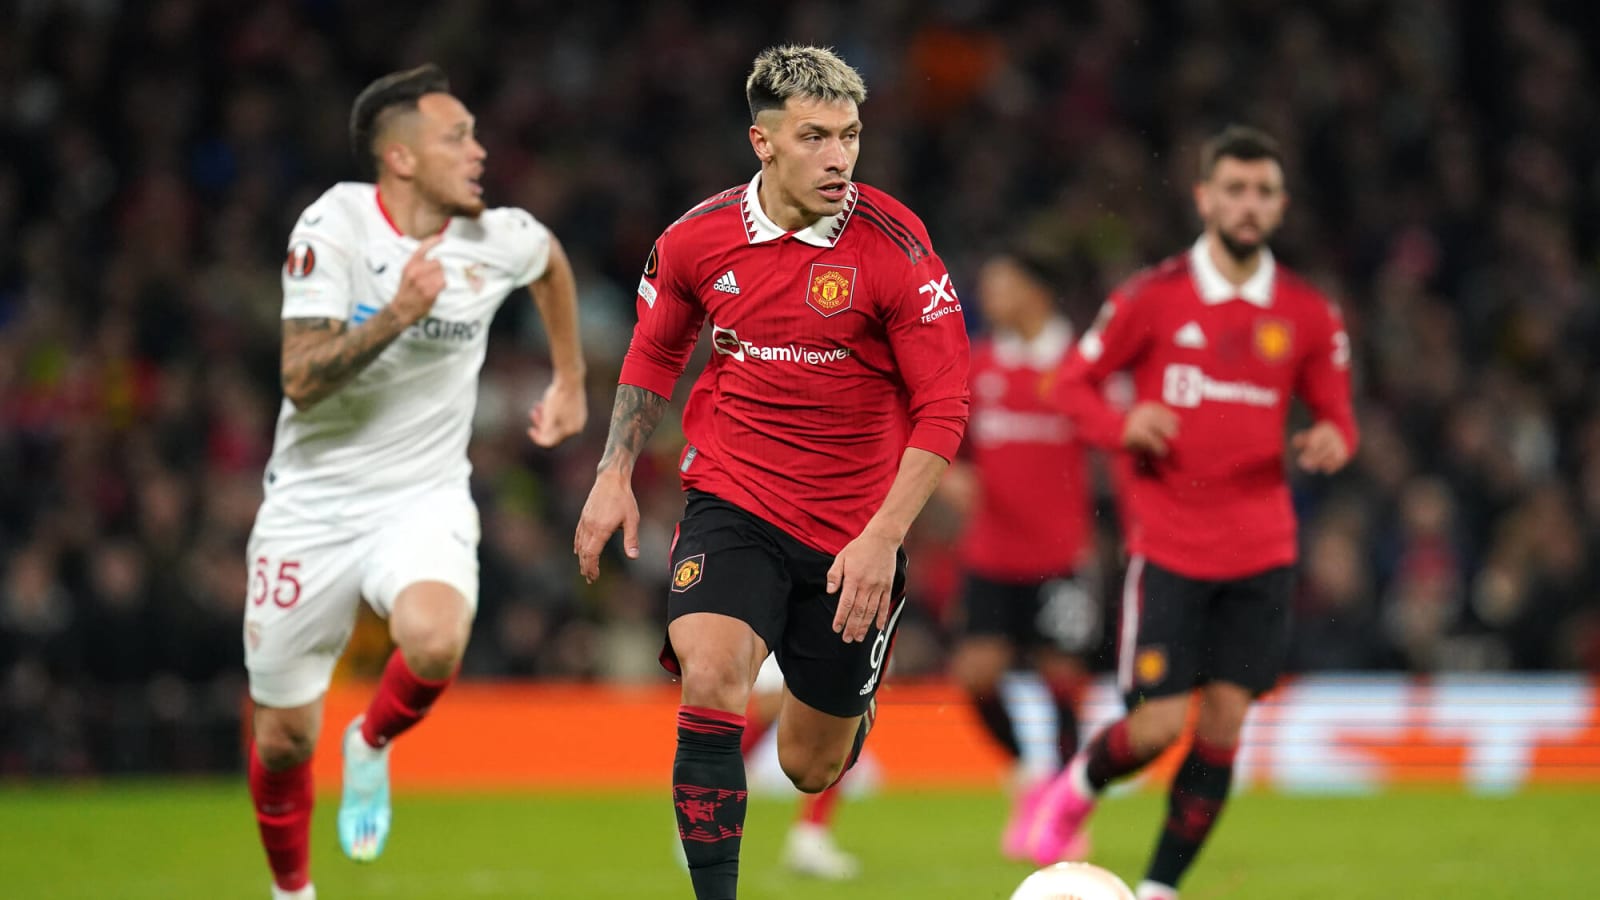 “I like him” – Nemanja Vidic gives glowing review of Man United defender